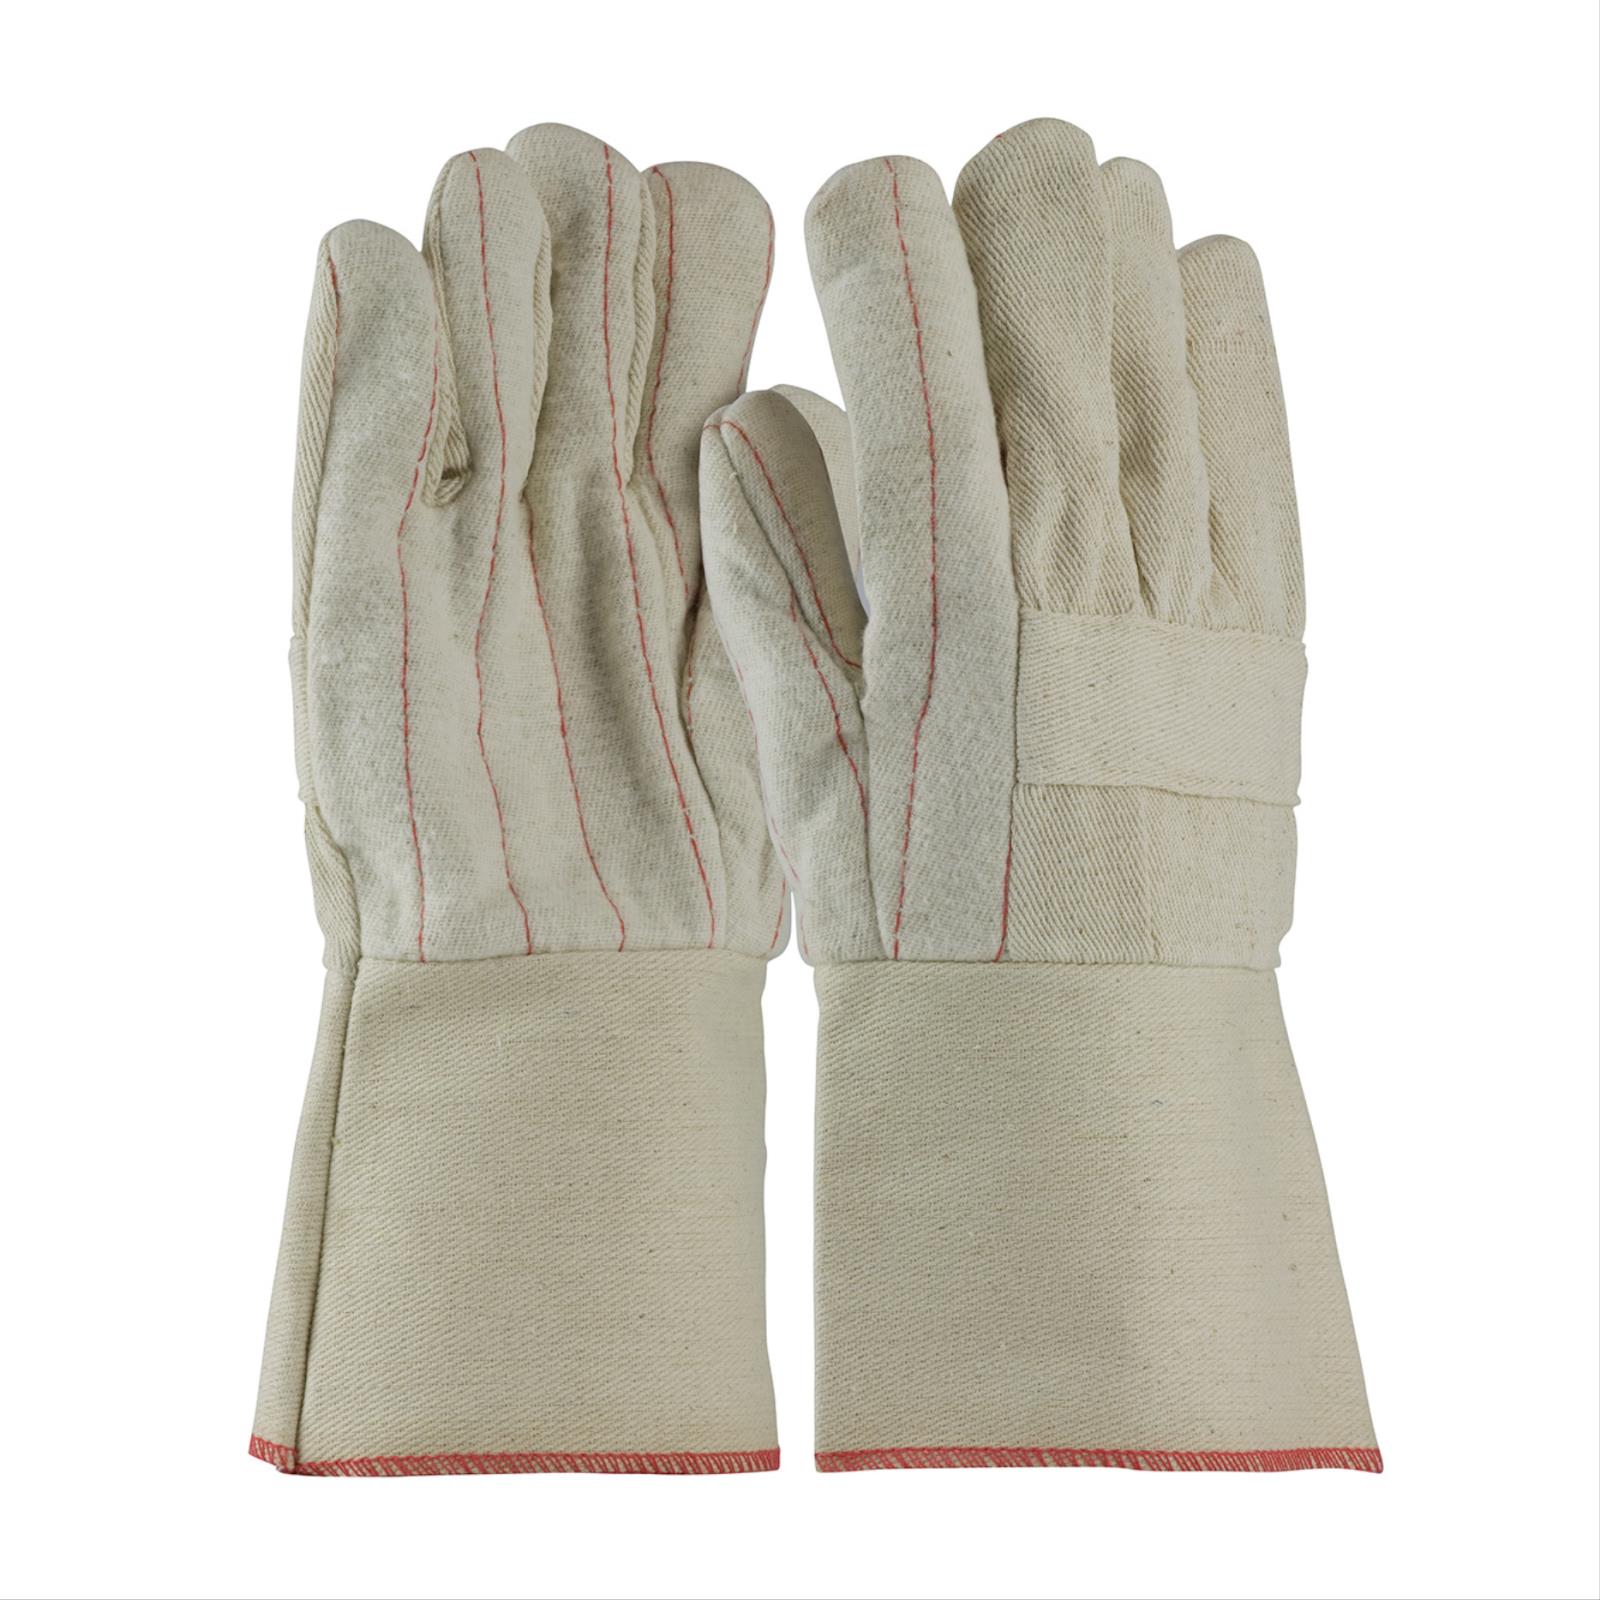 Premium Grade Hot Mill Glove, Burlap Liner, Gauntlet Cuff, 28 oz